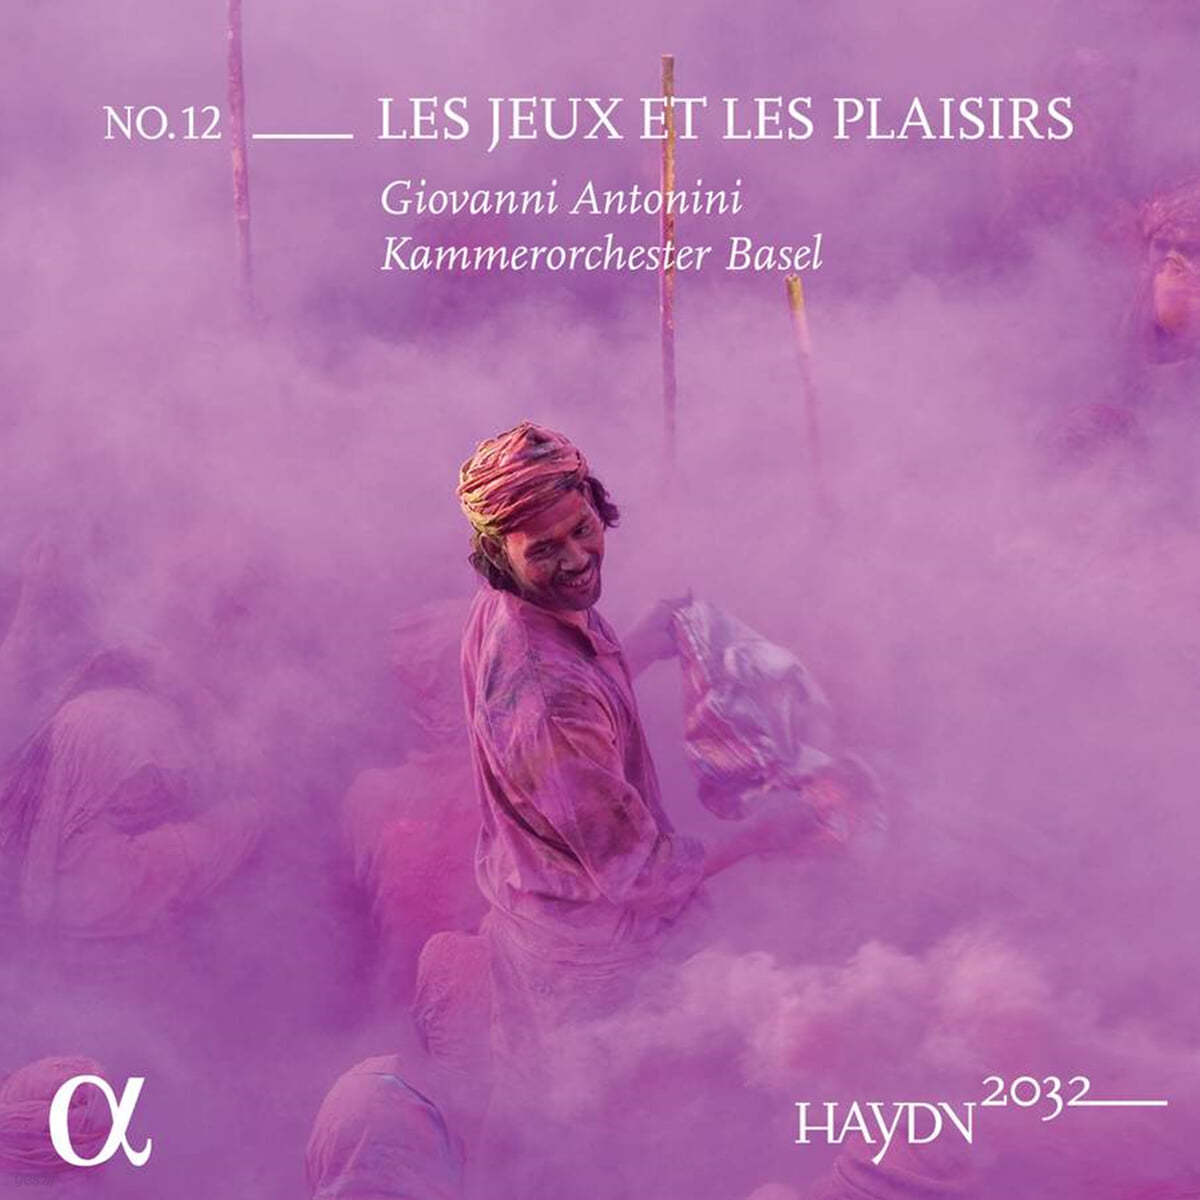 Giovanni Antonini 하이든 2032 프로젝트 12집 - 교향곡 61번, 66번, 69번, 장난감 교향곡 (Haydn 2032 Vol. 12 - Les jeux et les plaisi)